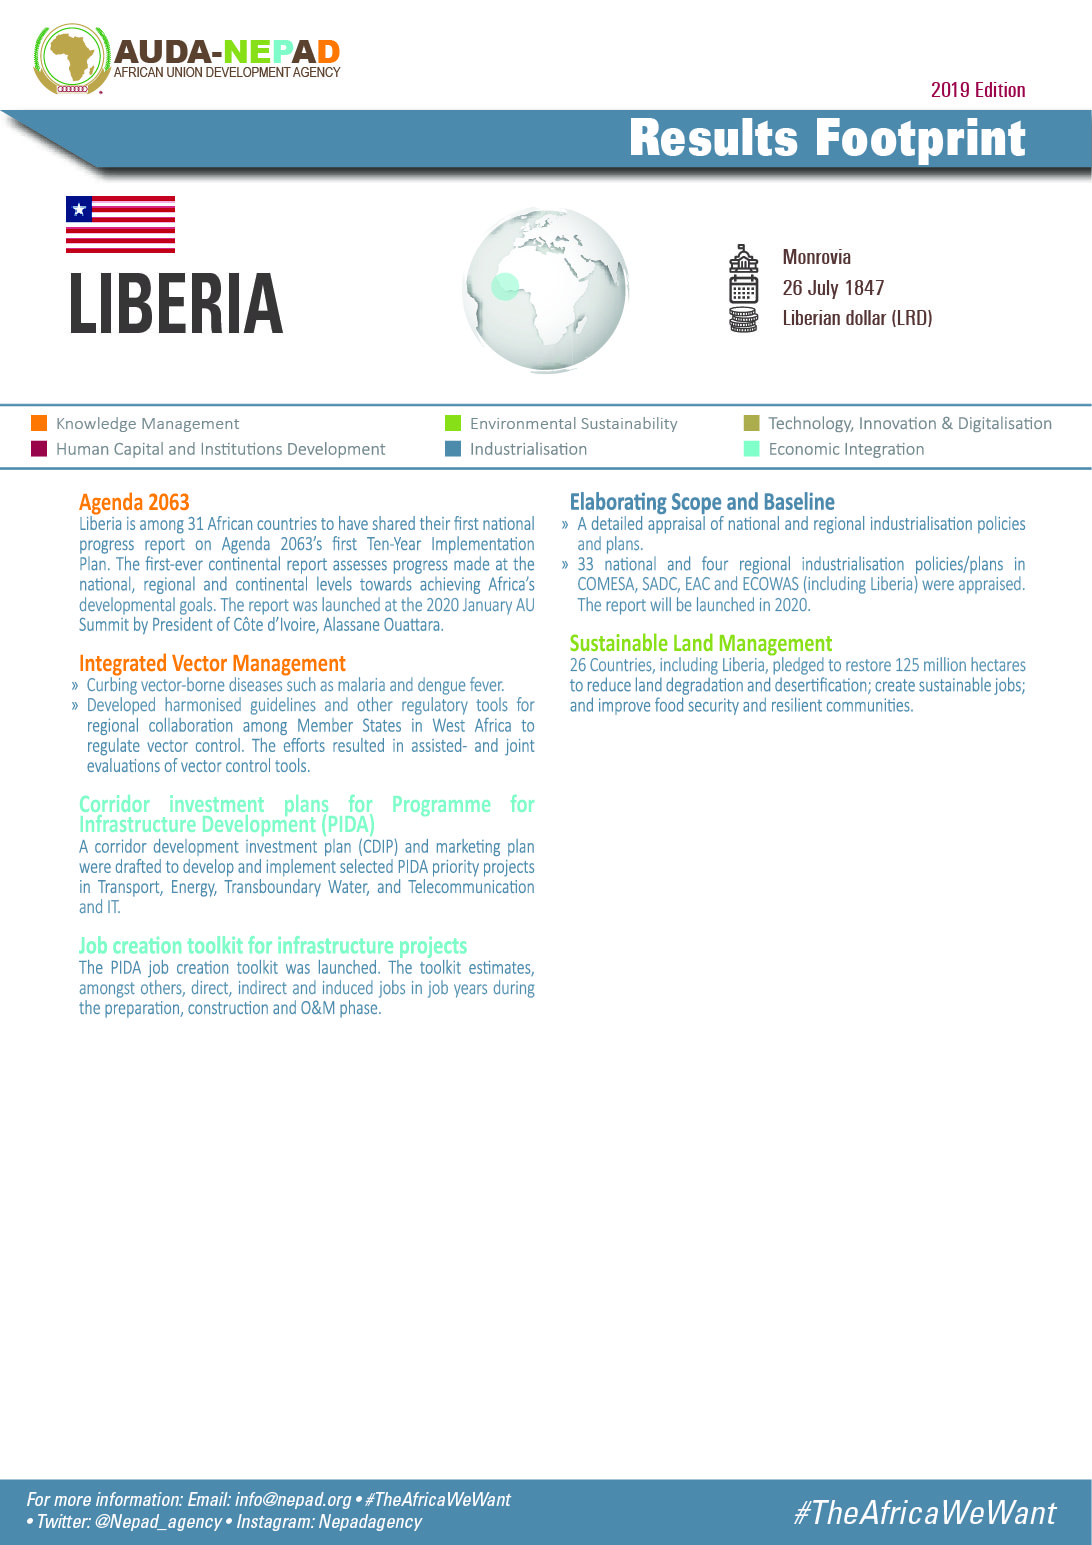 2019 AUDA-NEPAD Footprint: Country Profiles: Liberia